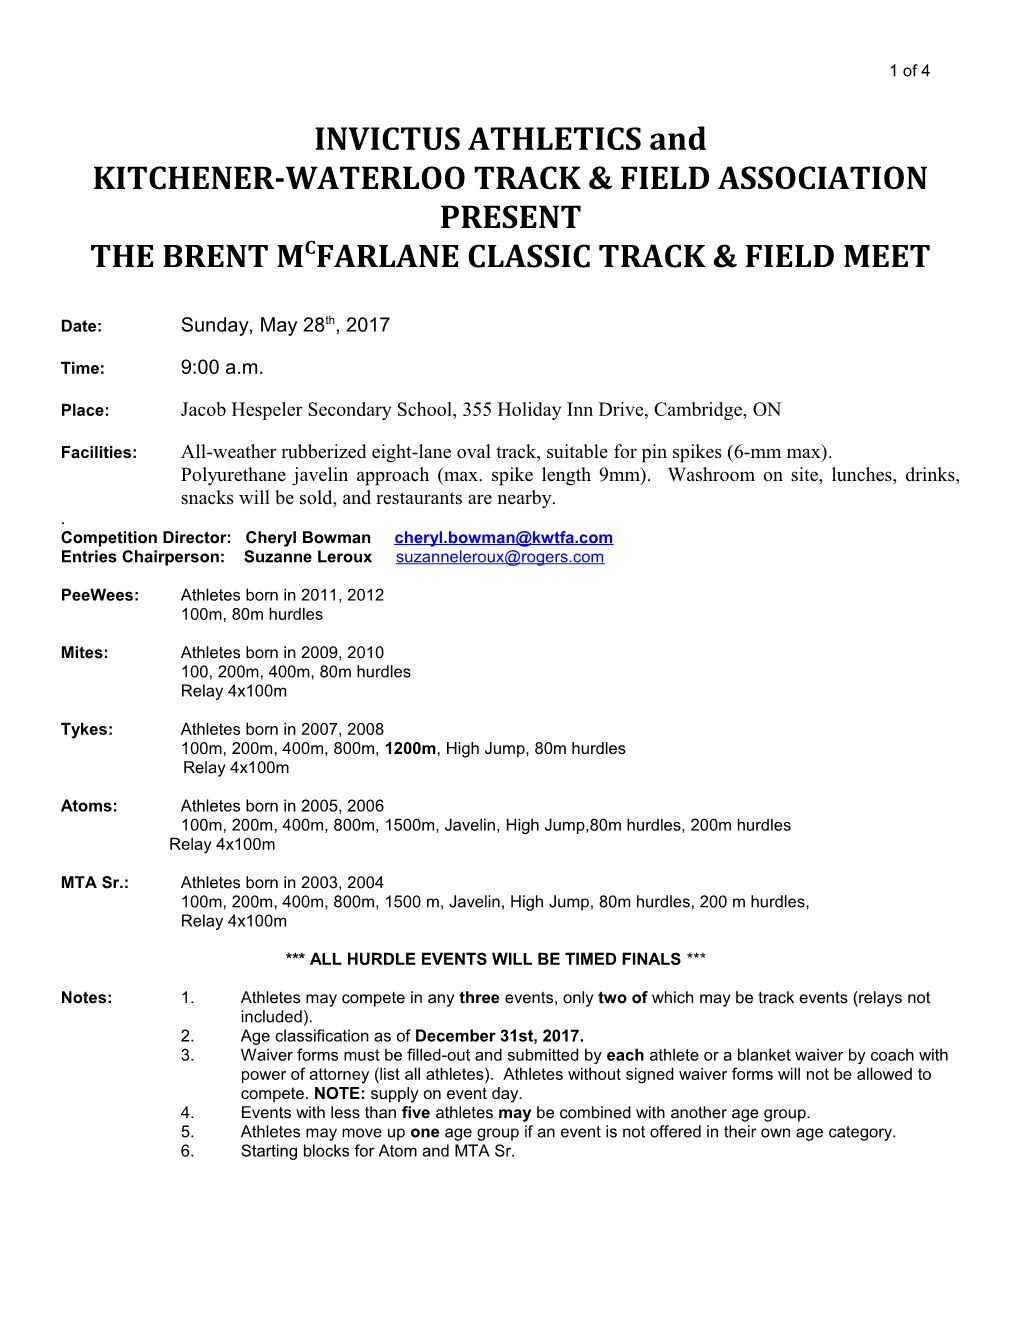 Kitchener-Waterloo Track & Field Association